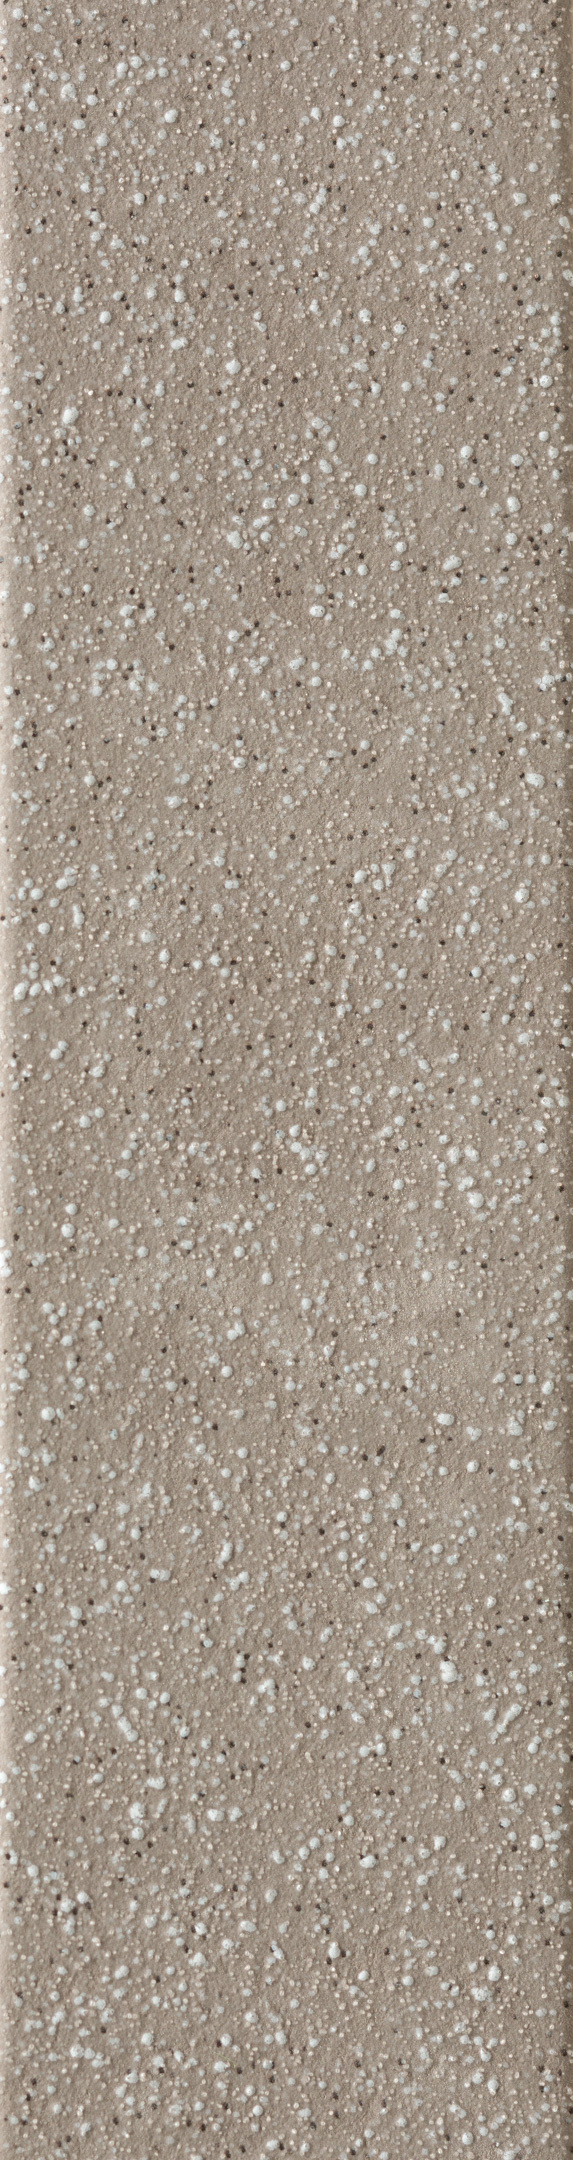 фото Клинкерная плитка керамин мичиган 3 бежевая 245х65х7 мм (34 шт.=0,54 кв.м)